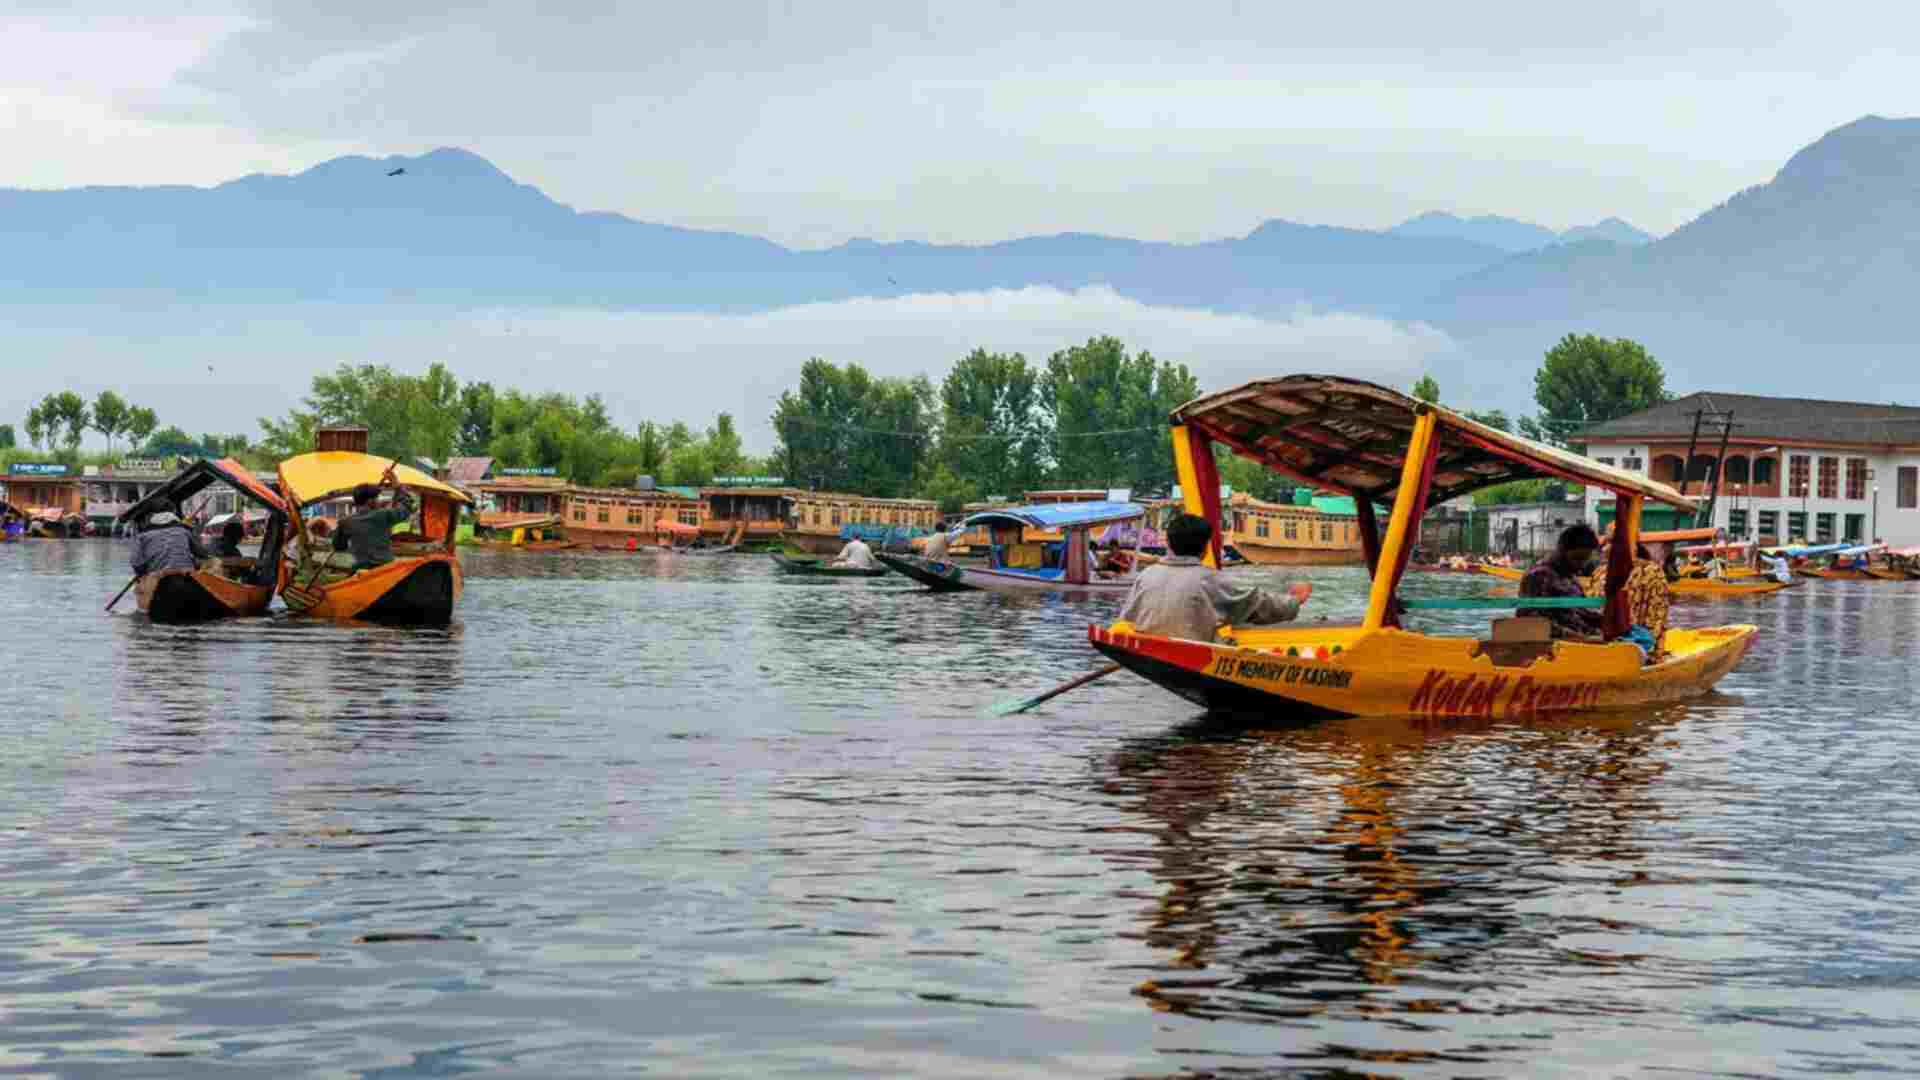 Kashmir: Small-Medium Enterprises Thrive Beyond Tourism Here